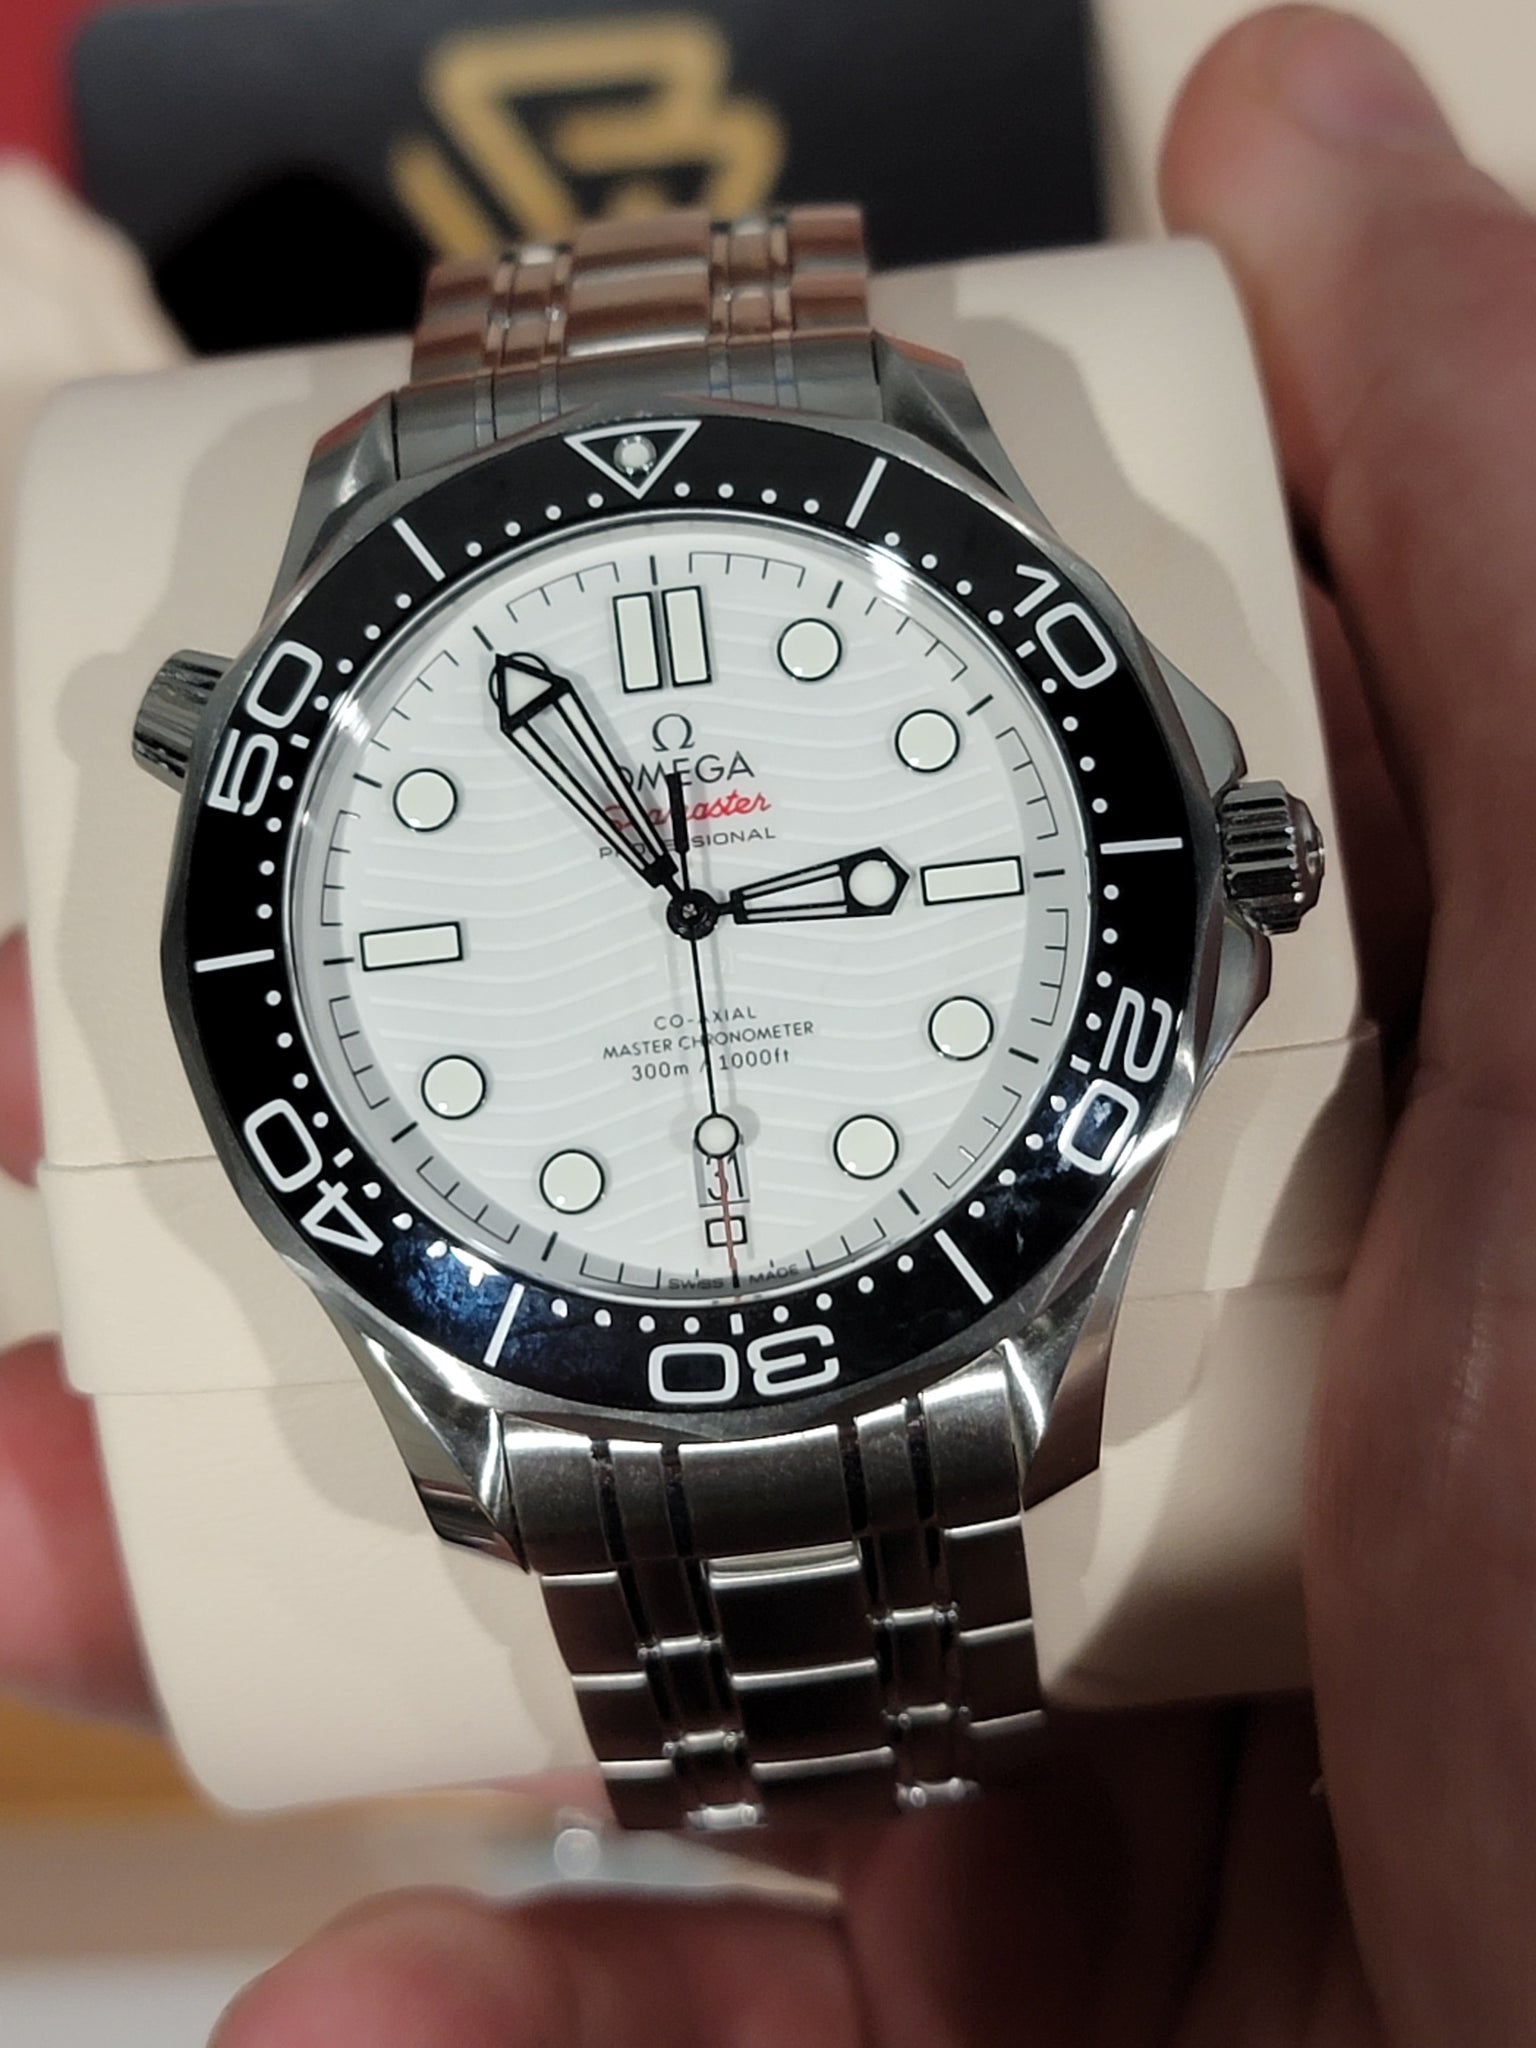 Omega Seamaster Professional Diver - Biel Watches